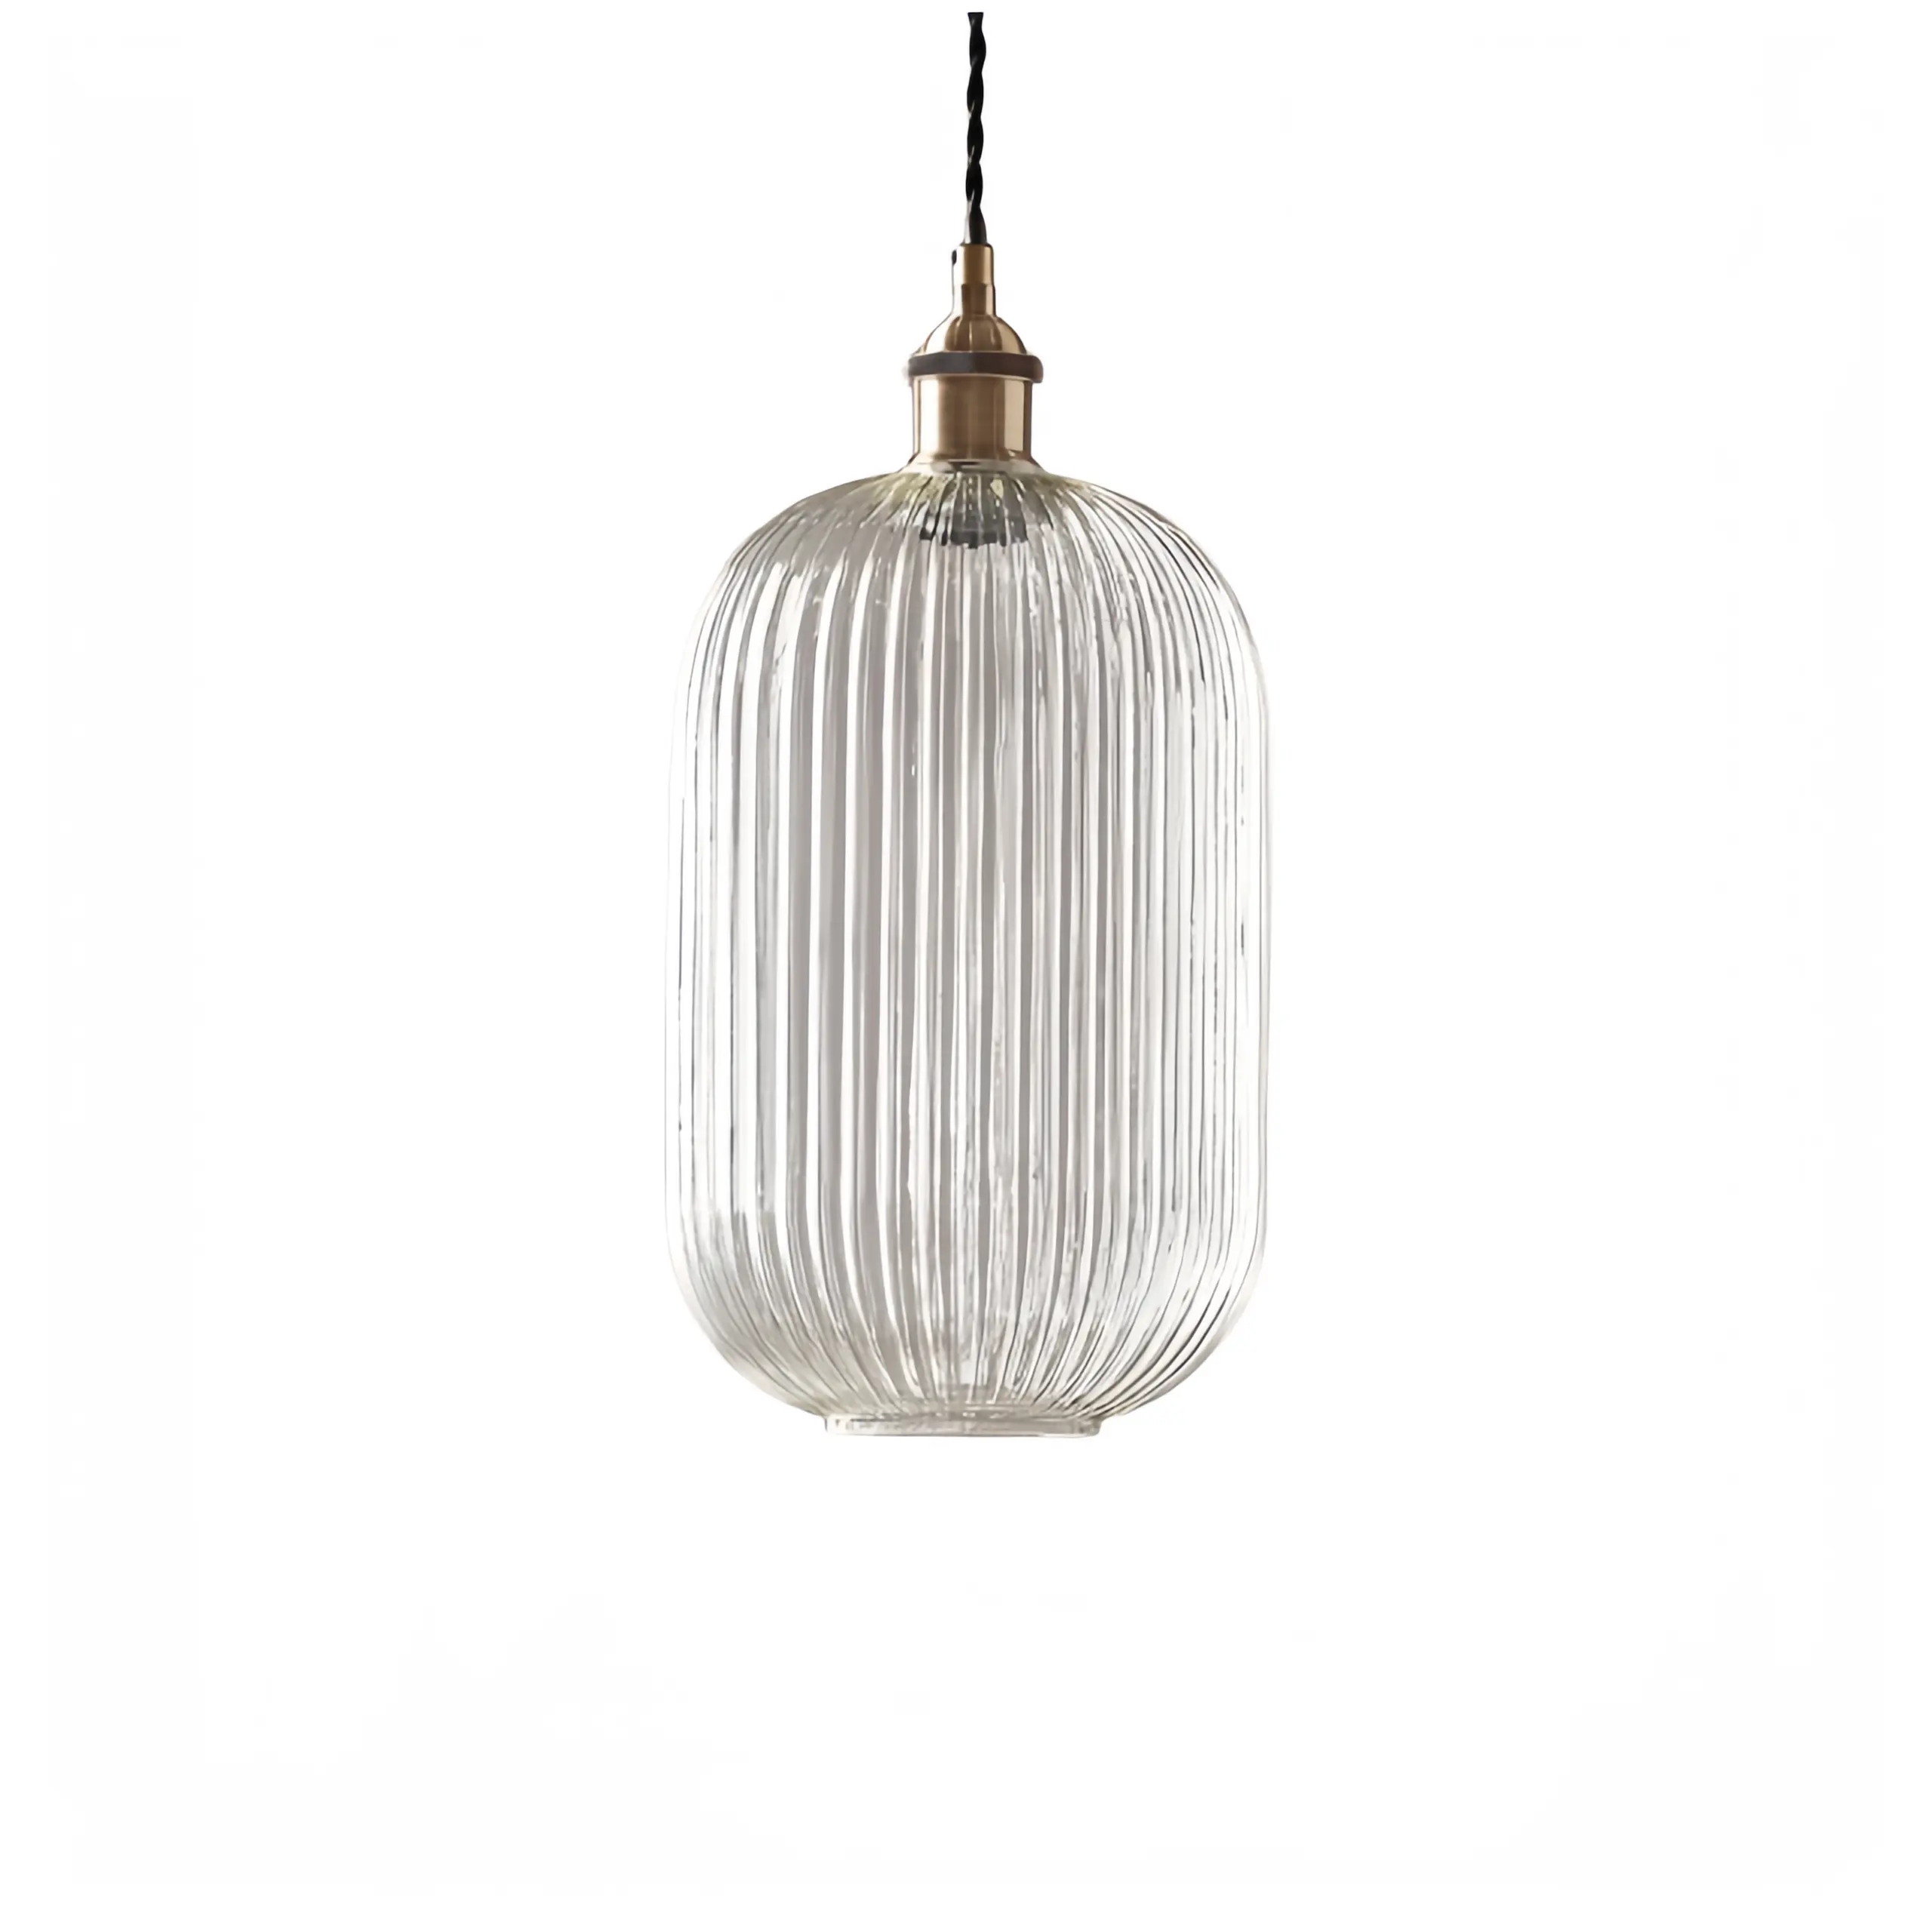 Cilindro contemporáneo lámpara de cristal transparente de caña larga decoración lámpara colgante para Villa Hotel sala de estar